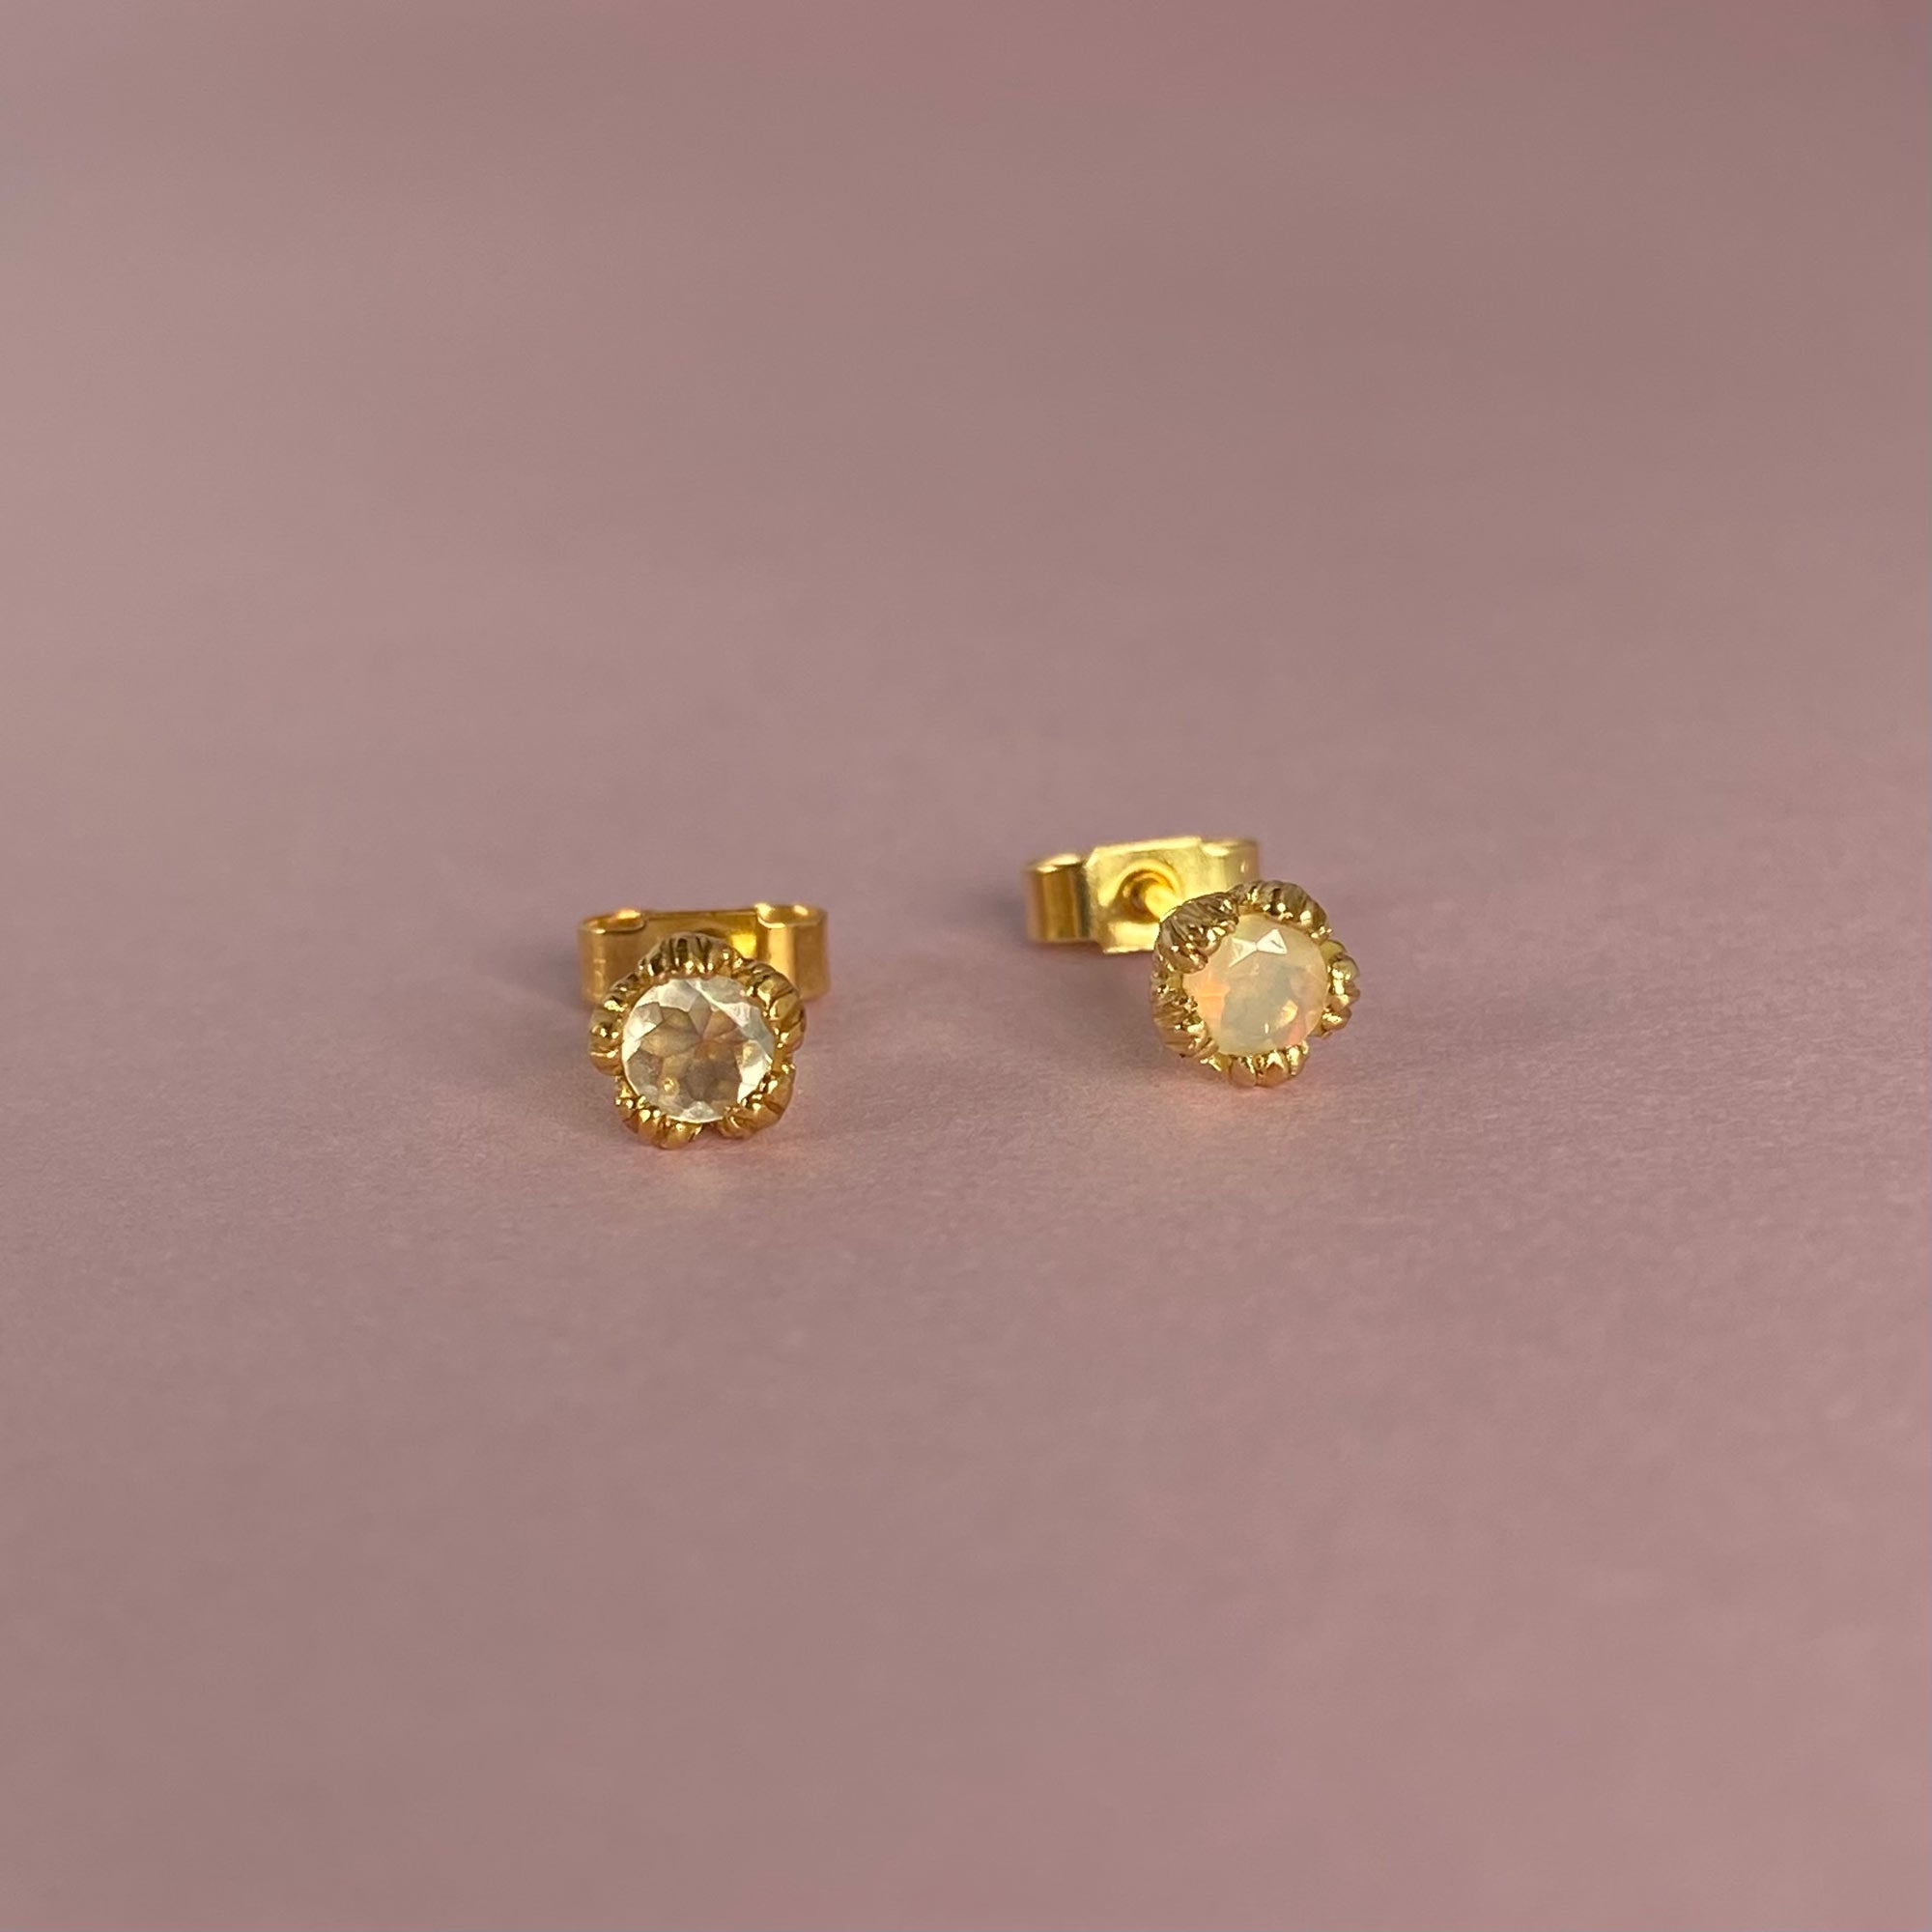 Faceted opal gold earrings